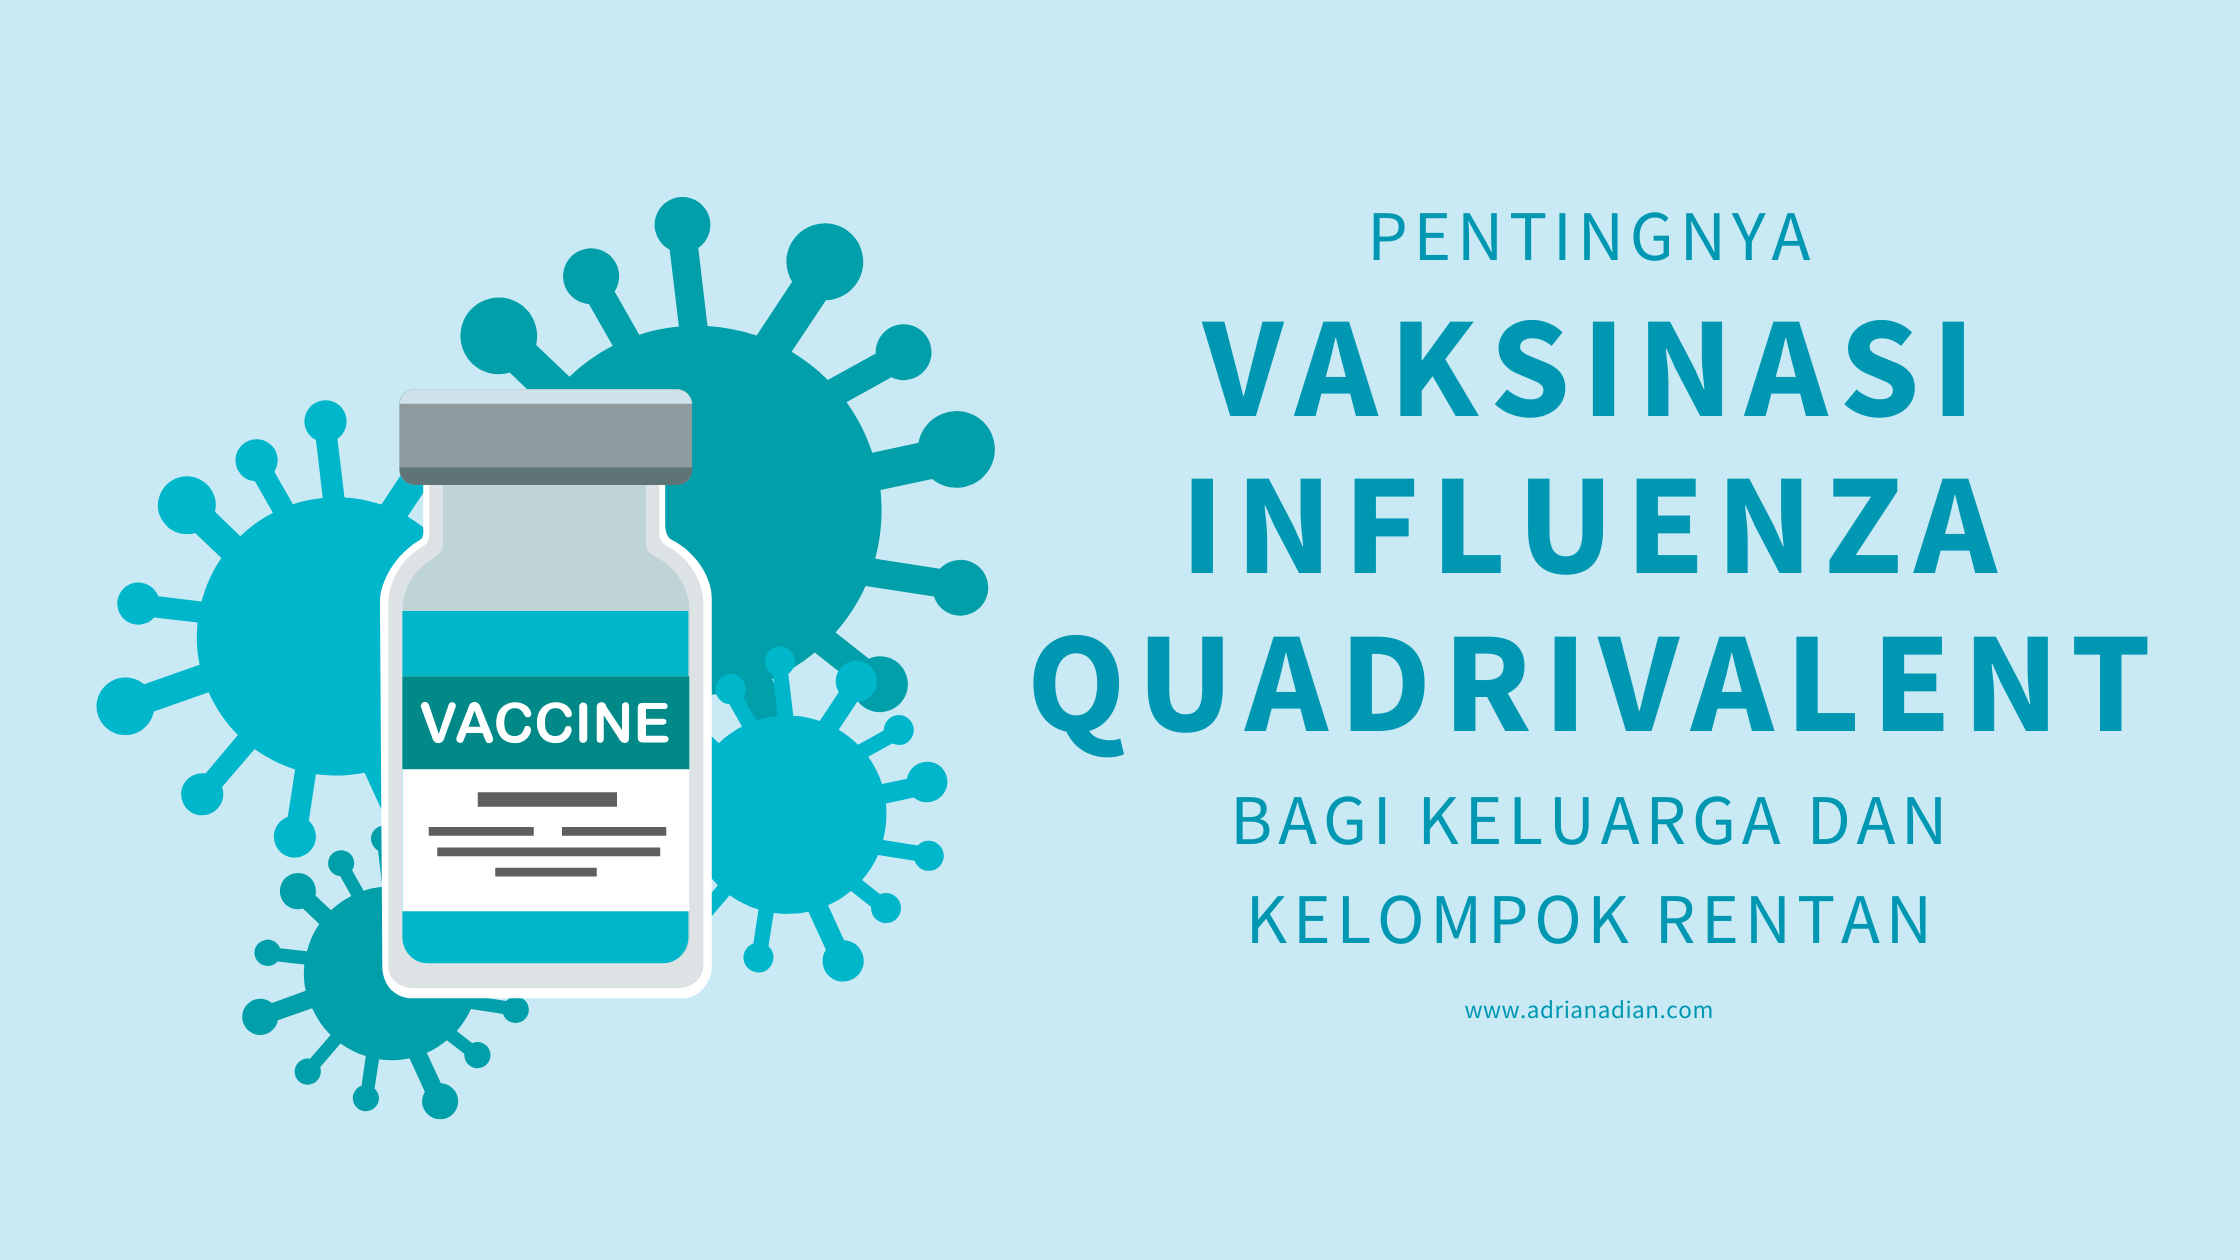 Cegah bahaya kematian akibat Influenza dengan vaksin influenza quadrivalent